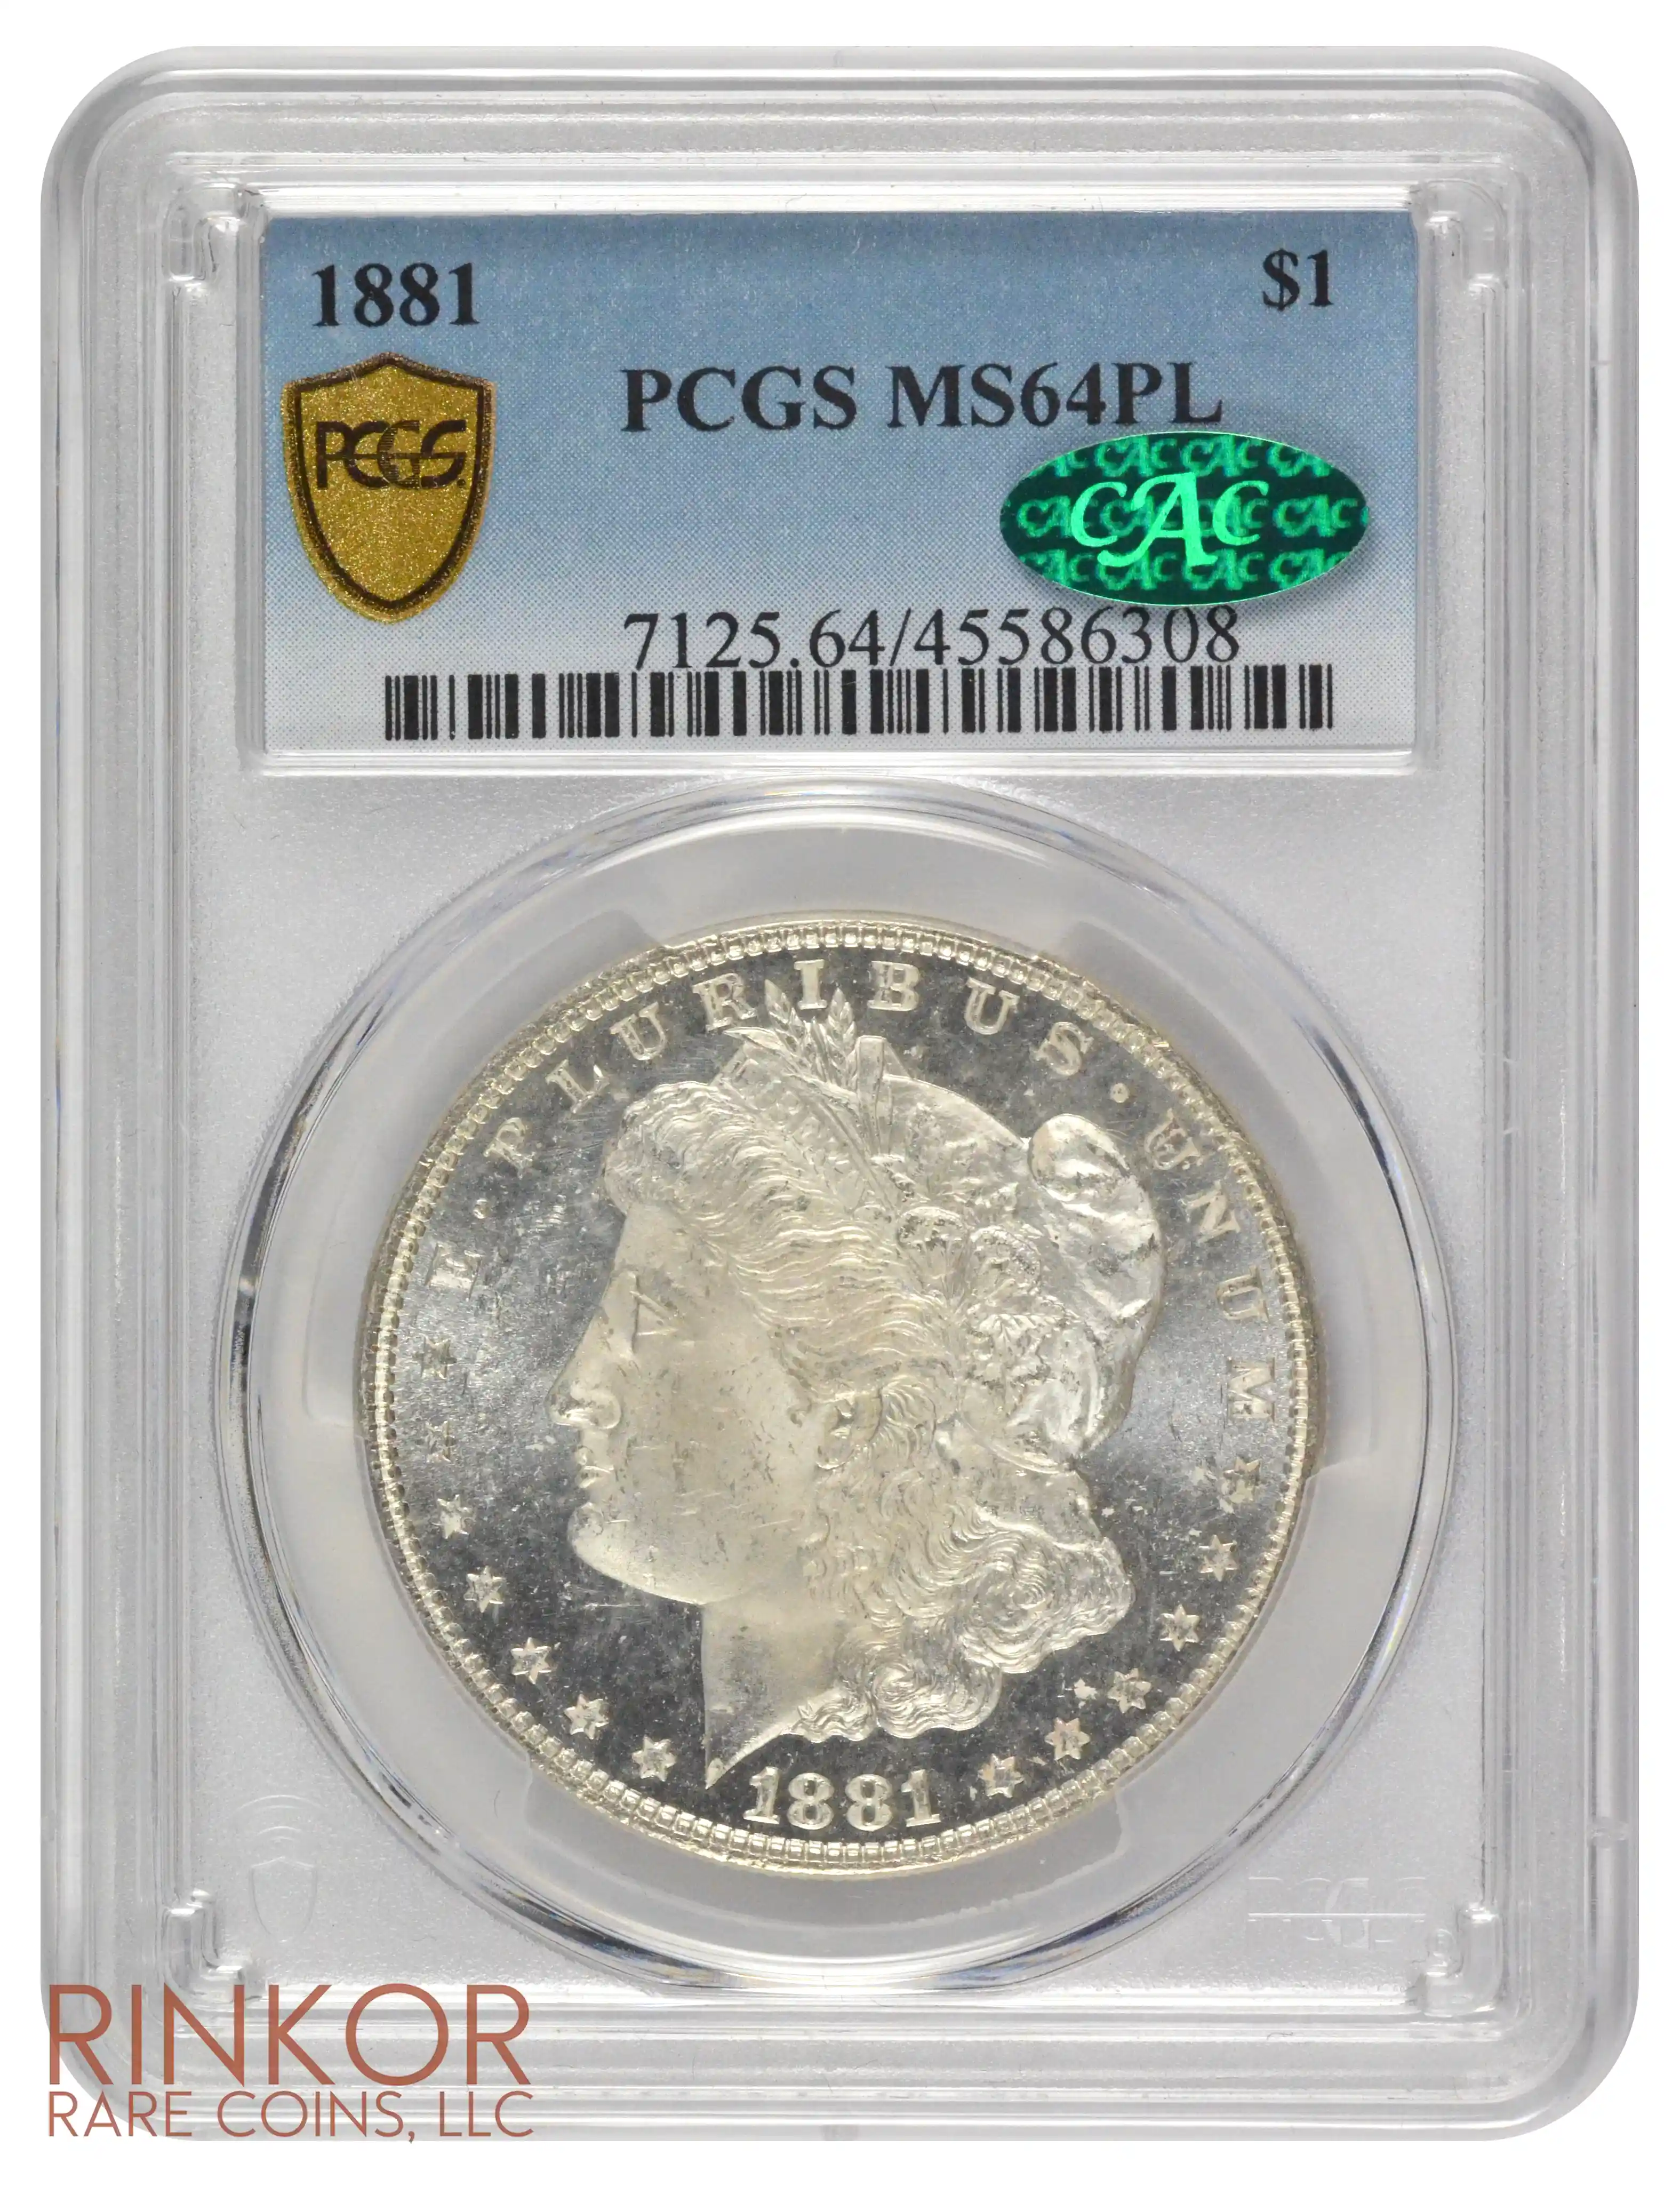 1881 $1 PCGS MS 64 PL CAC